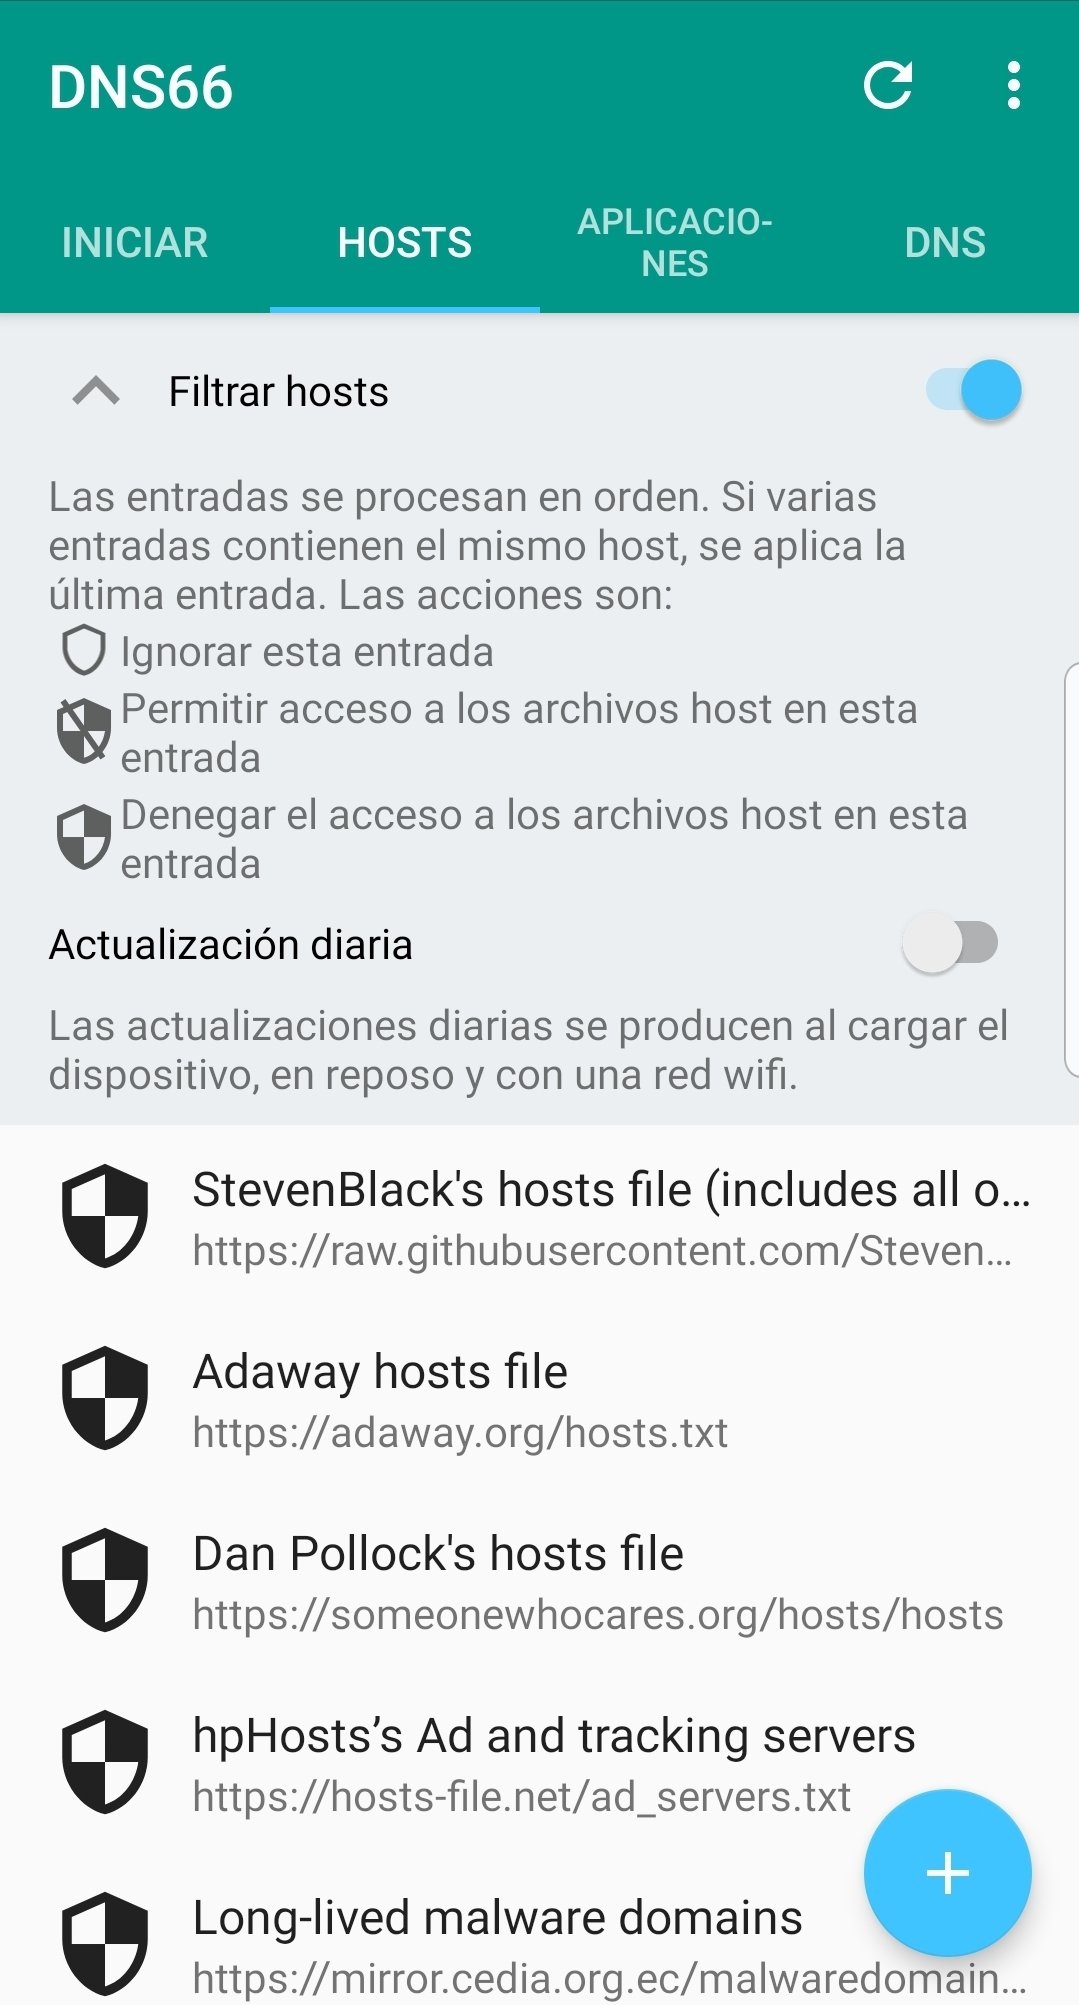 Hosts bloqueados en DNS66 